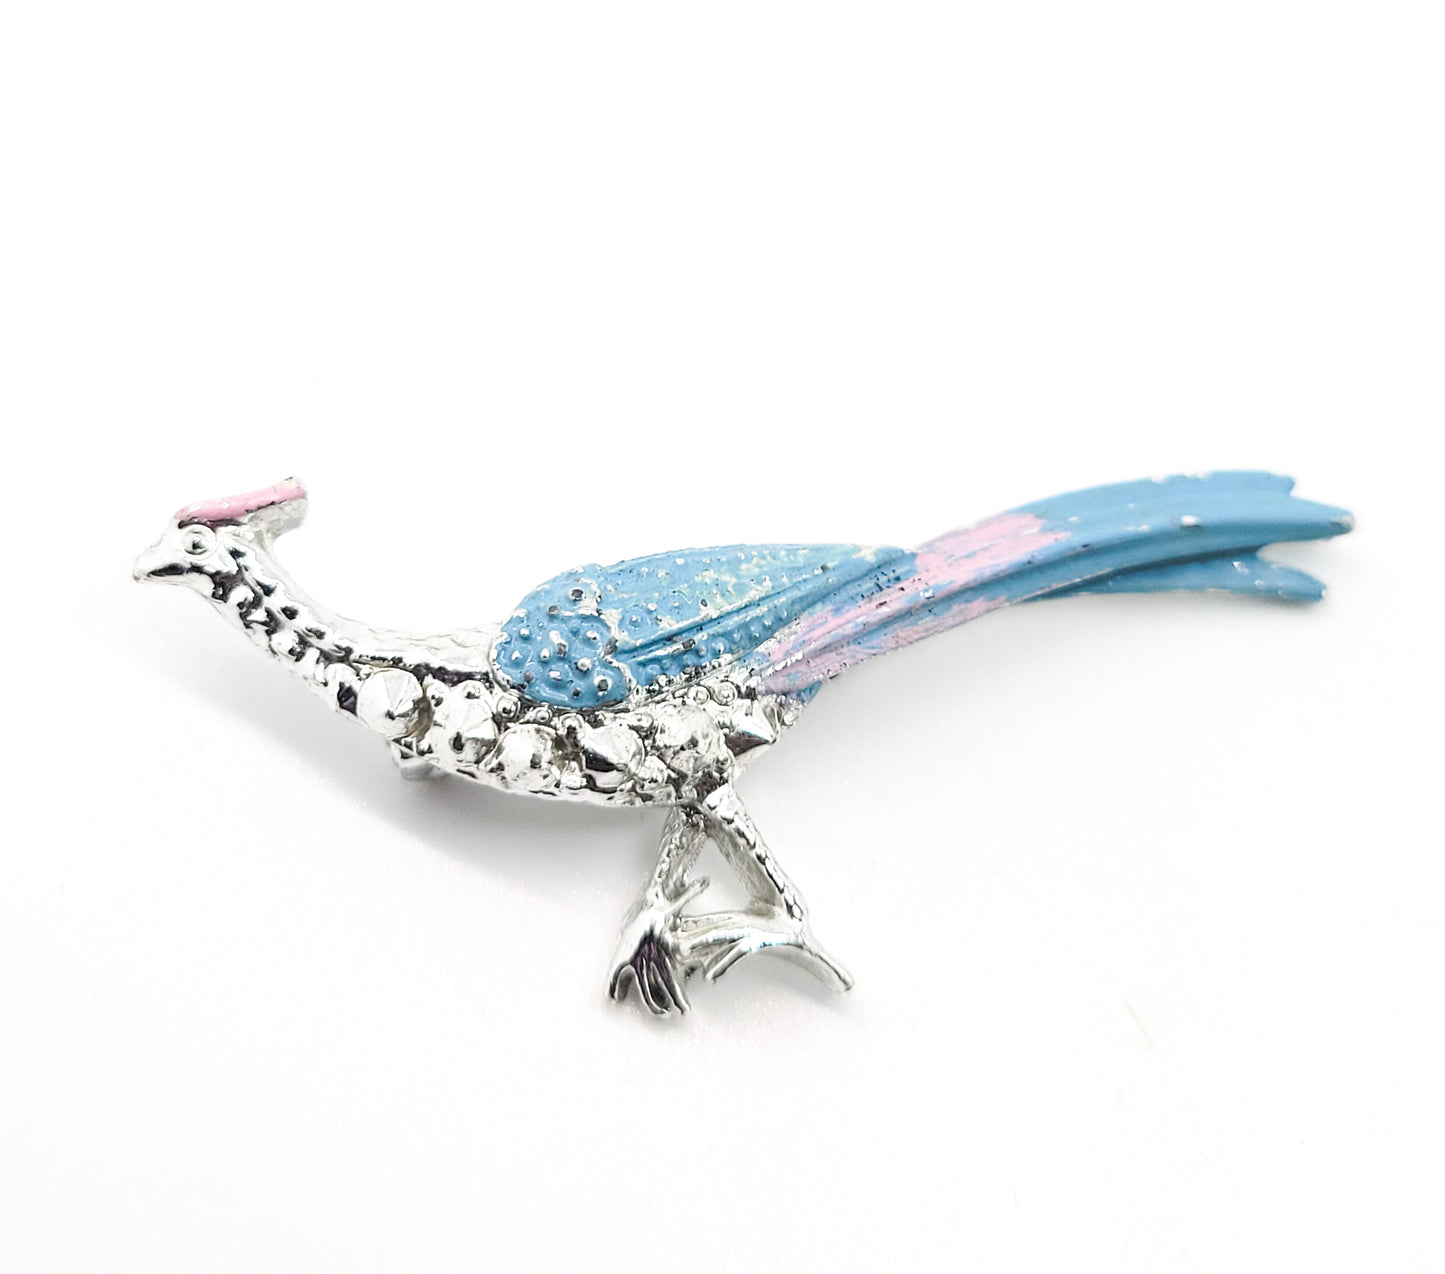 Pheasant vintage silver toned pink and blue enamel bird brooch